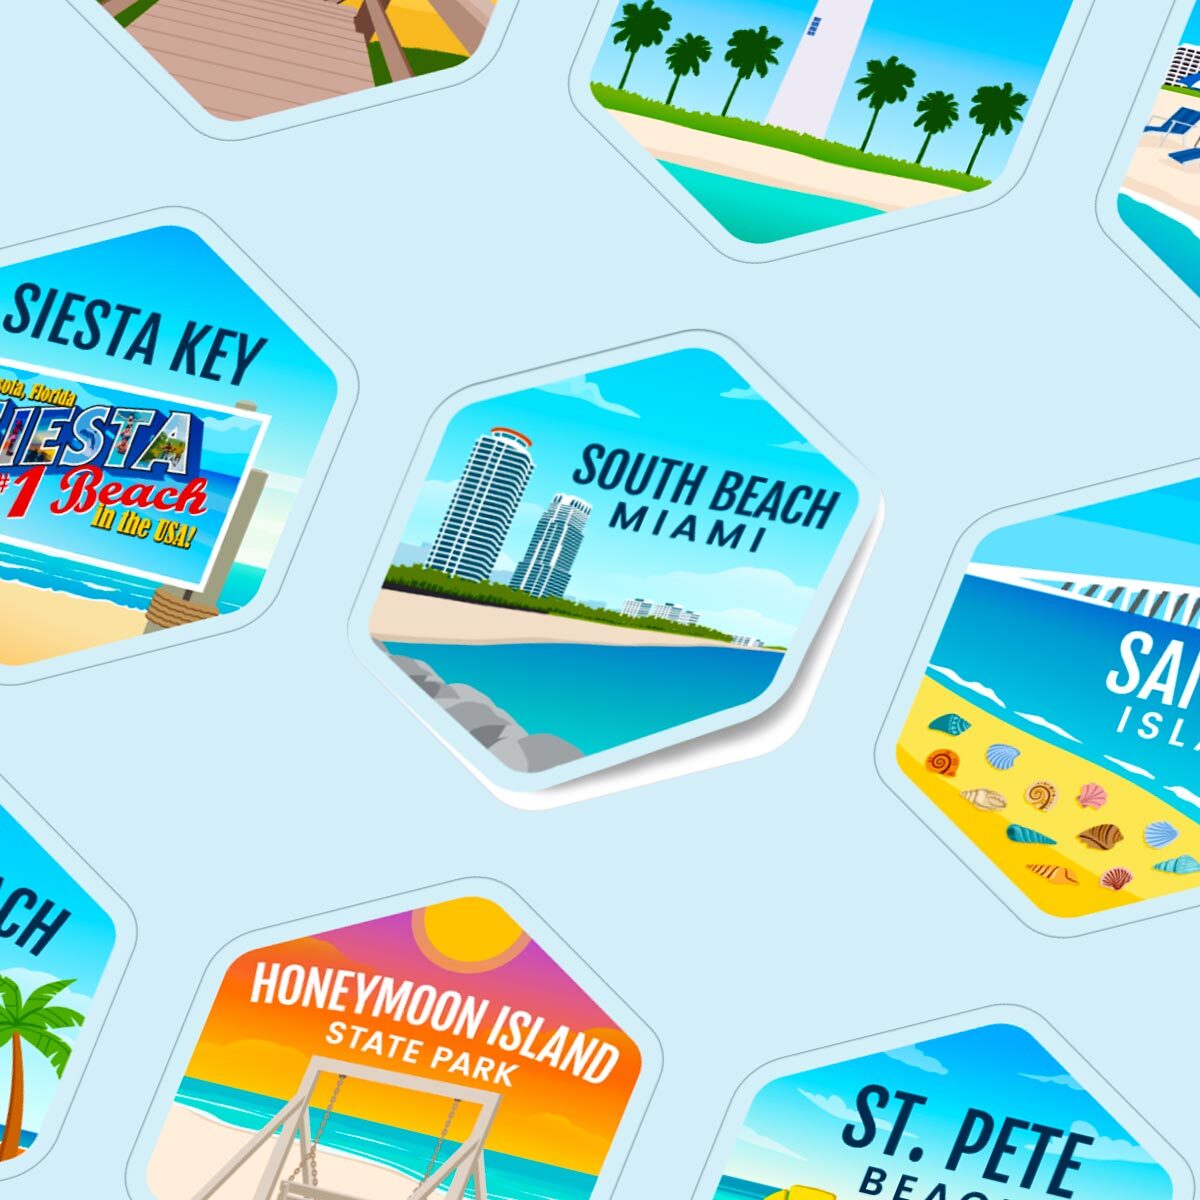 Sticker Sheet Closeup For The Florida Beach Towns Water Bottle. Show many popular Florida Beach Towns. Key West, Clearwater Beach, Anna Maria Island, Naples Beach, Honeymoon Island, Cocoa Beach, Daytona Beach, & More